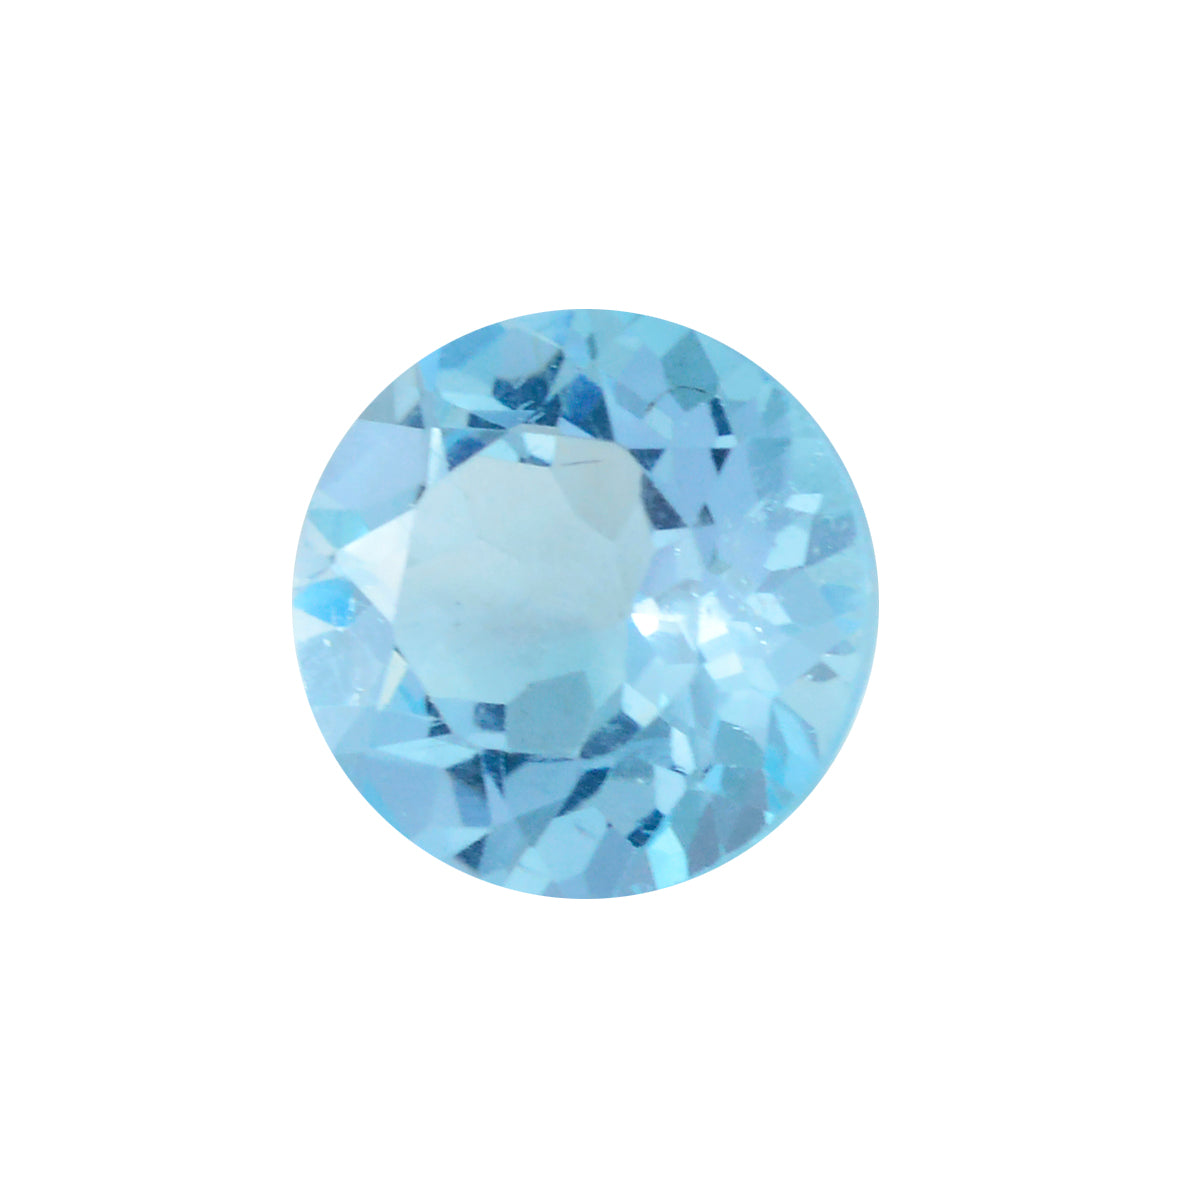 riyogems 1шт натуральный голубой топаз ограненный 13х13 мм круглая форма + качество россыпной камень